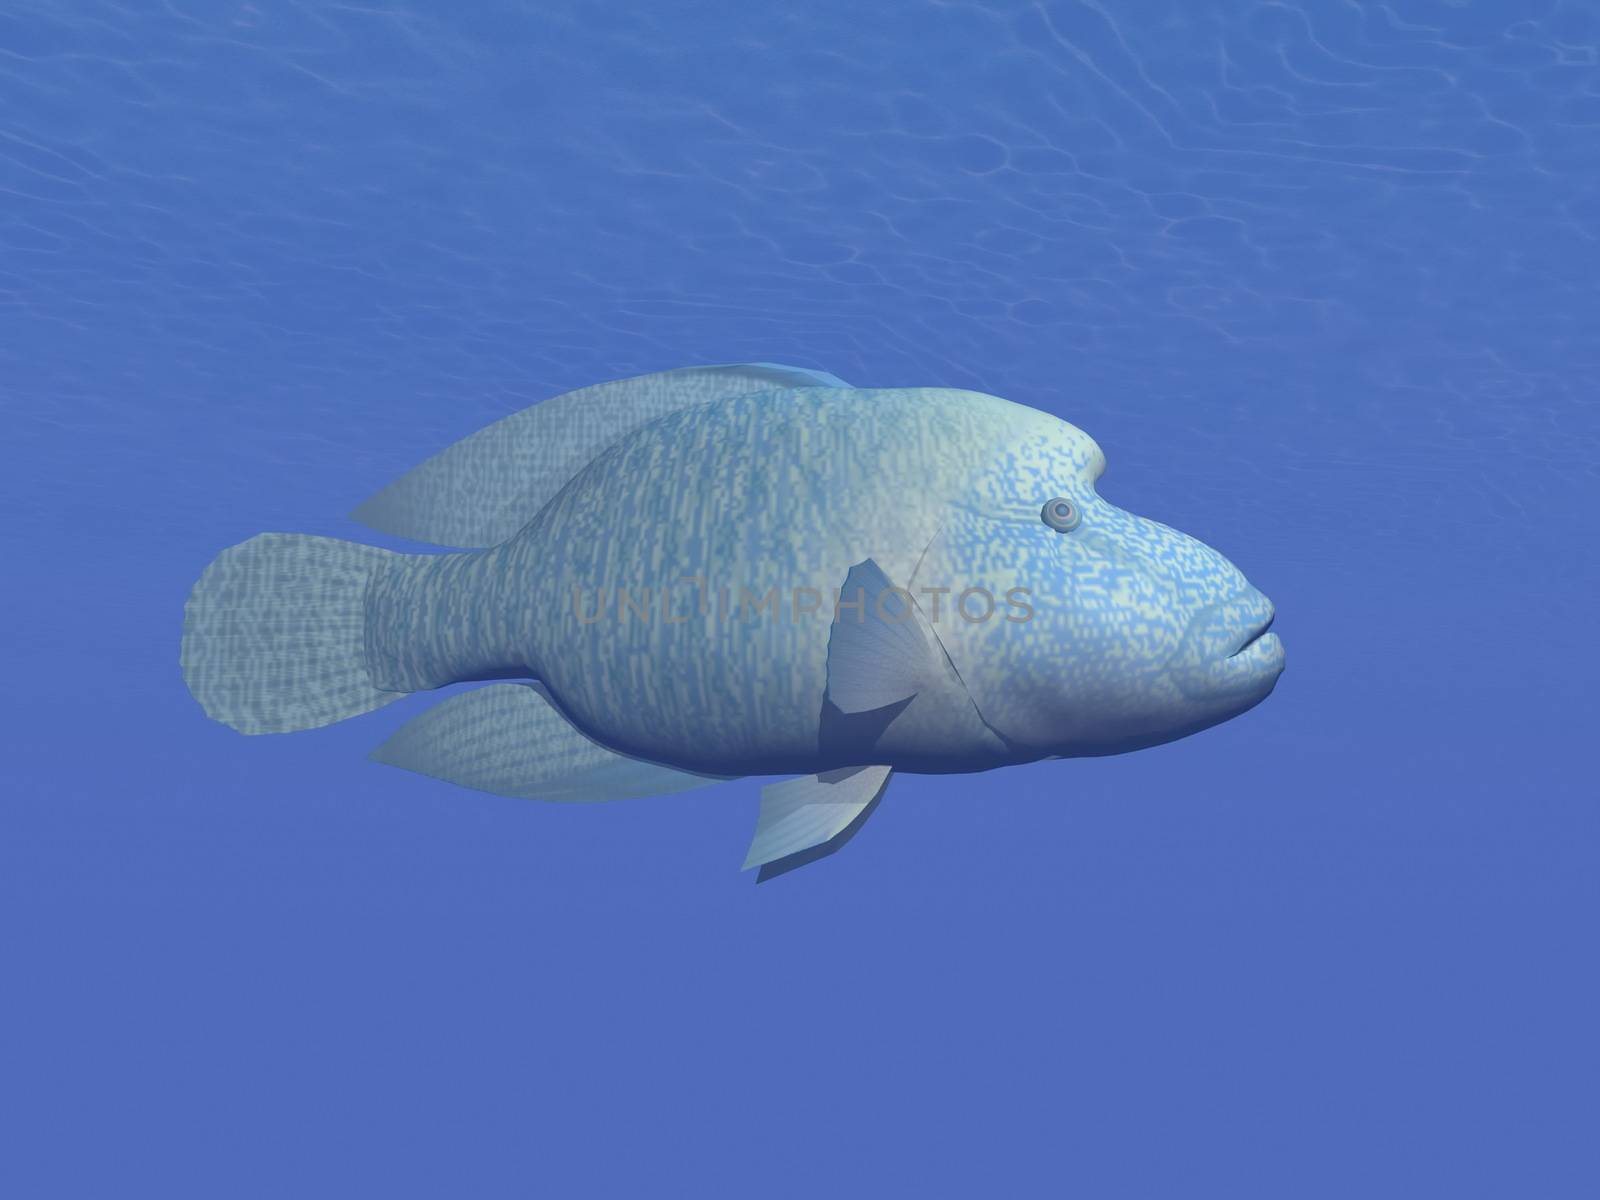 One napoleon fish in deep blue underwater